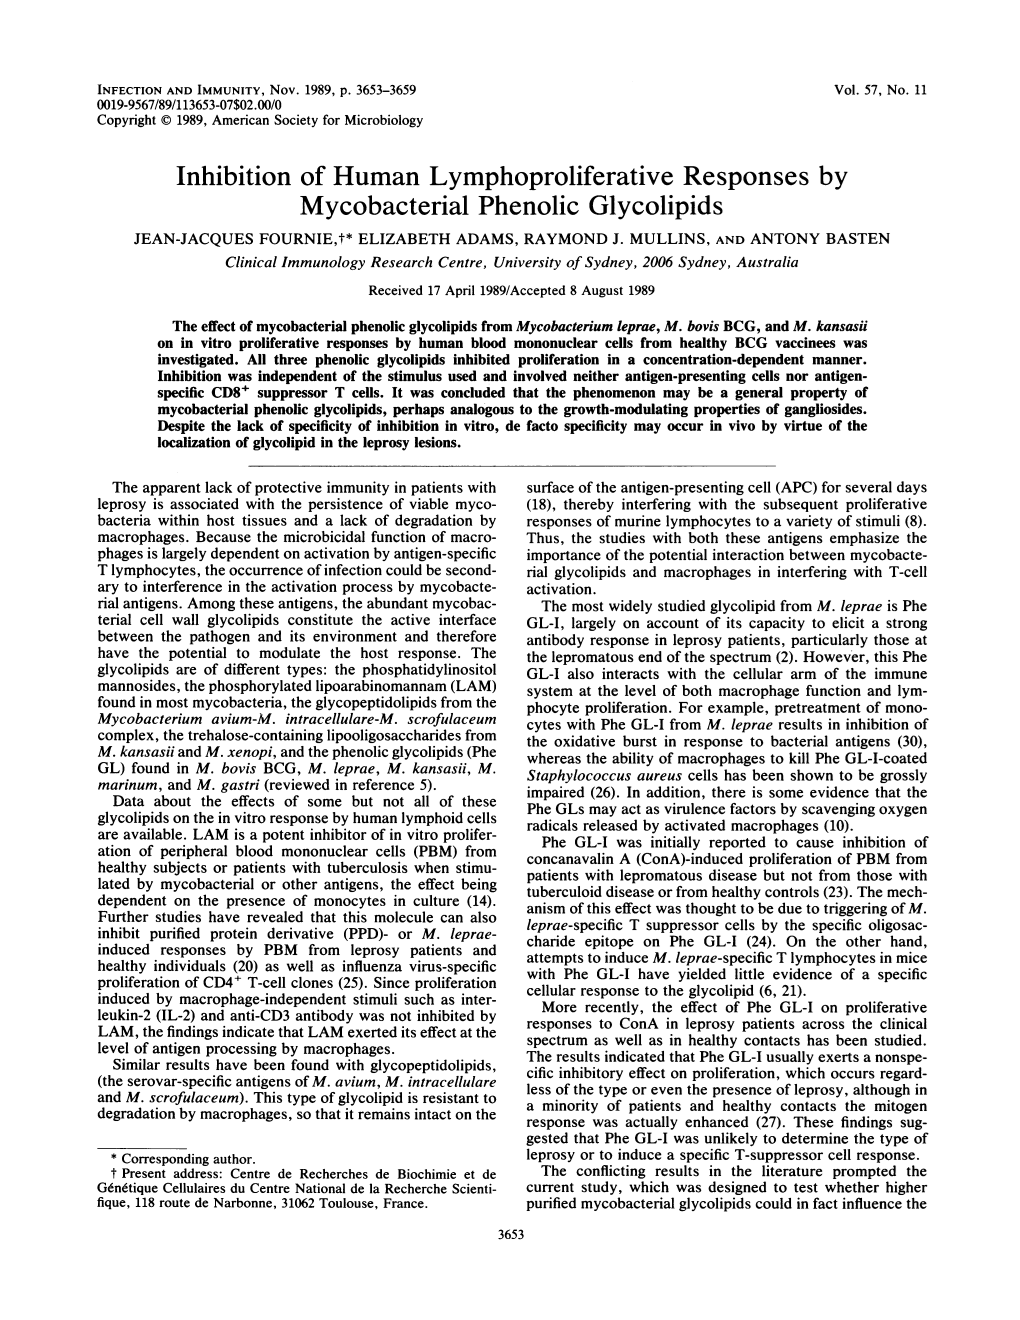 Inhibition of Human Lymphoproliferative Responses by Mycobacterial Phenolic Glycolipids JEAN-JACQUES FOURNIE,T* ELIZABETH ADAMS, RAYMOND J